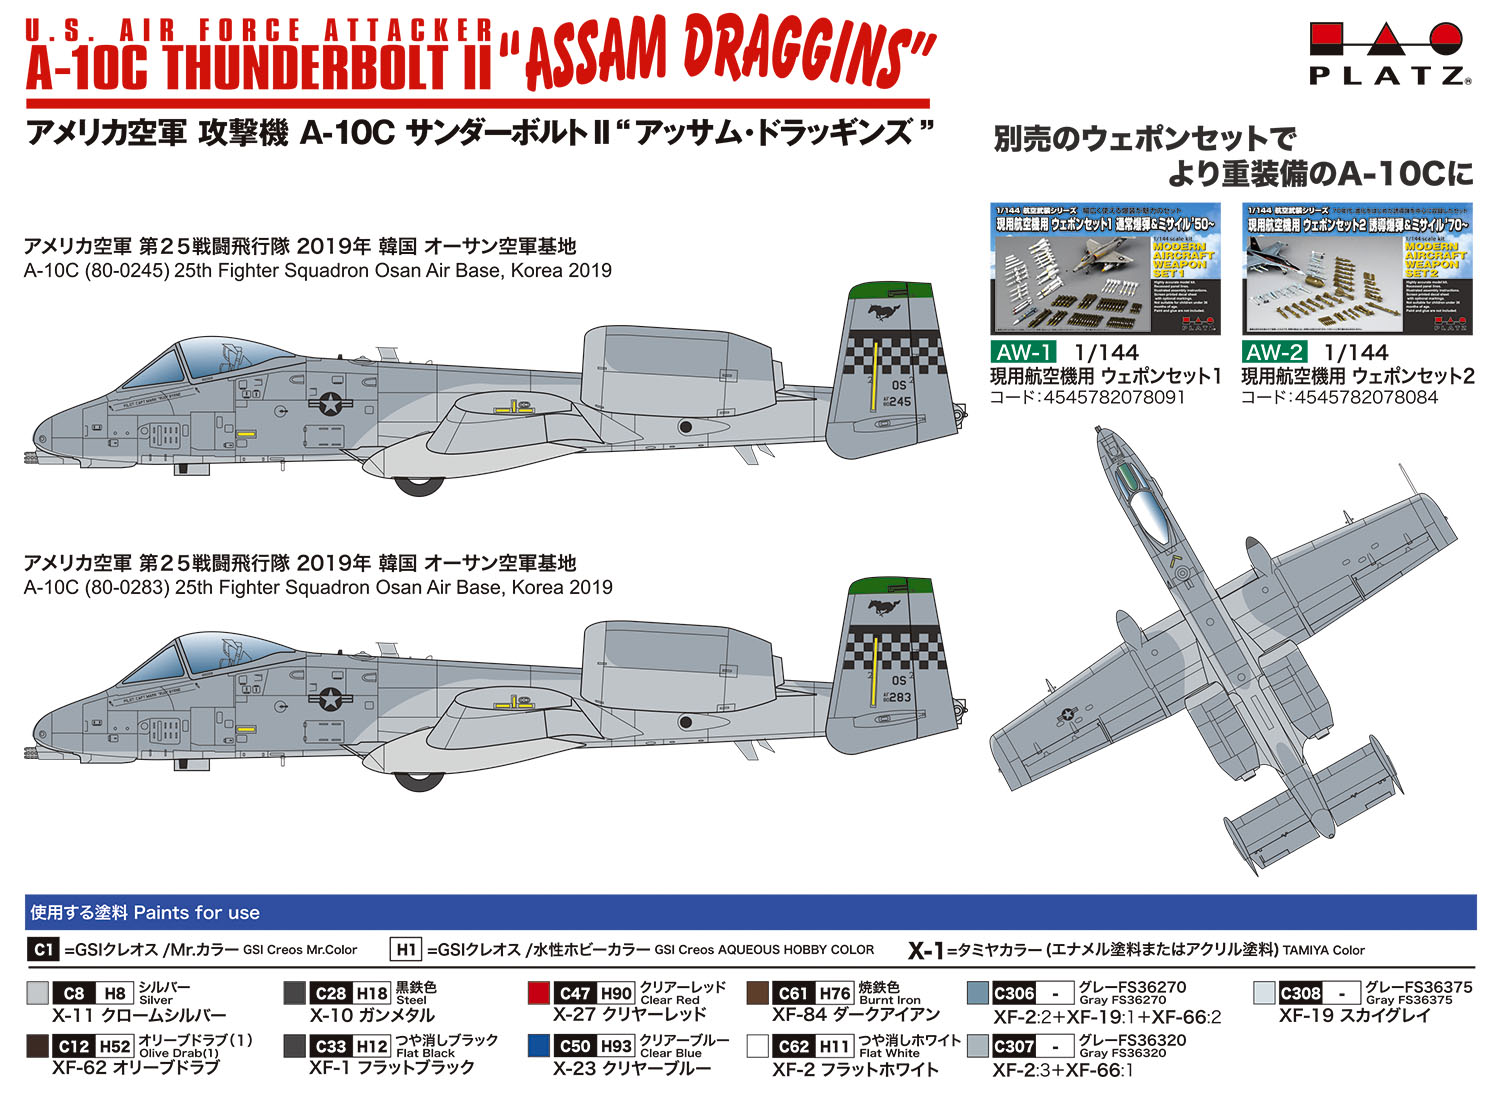 PLATZ 1/144 USAF Fighter A-10C Thunderbolt II "Assam Draggins"